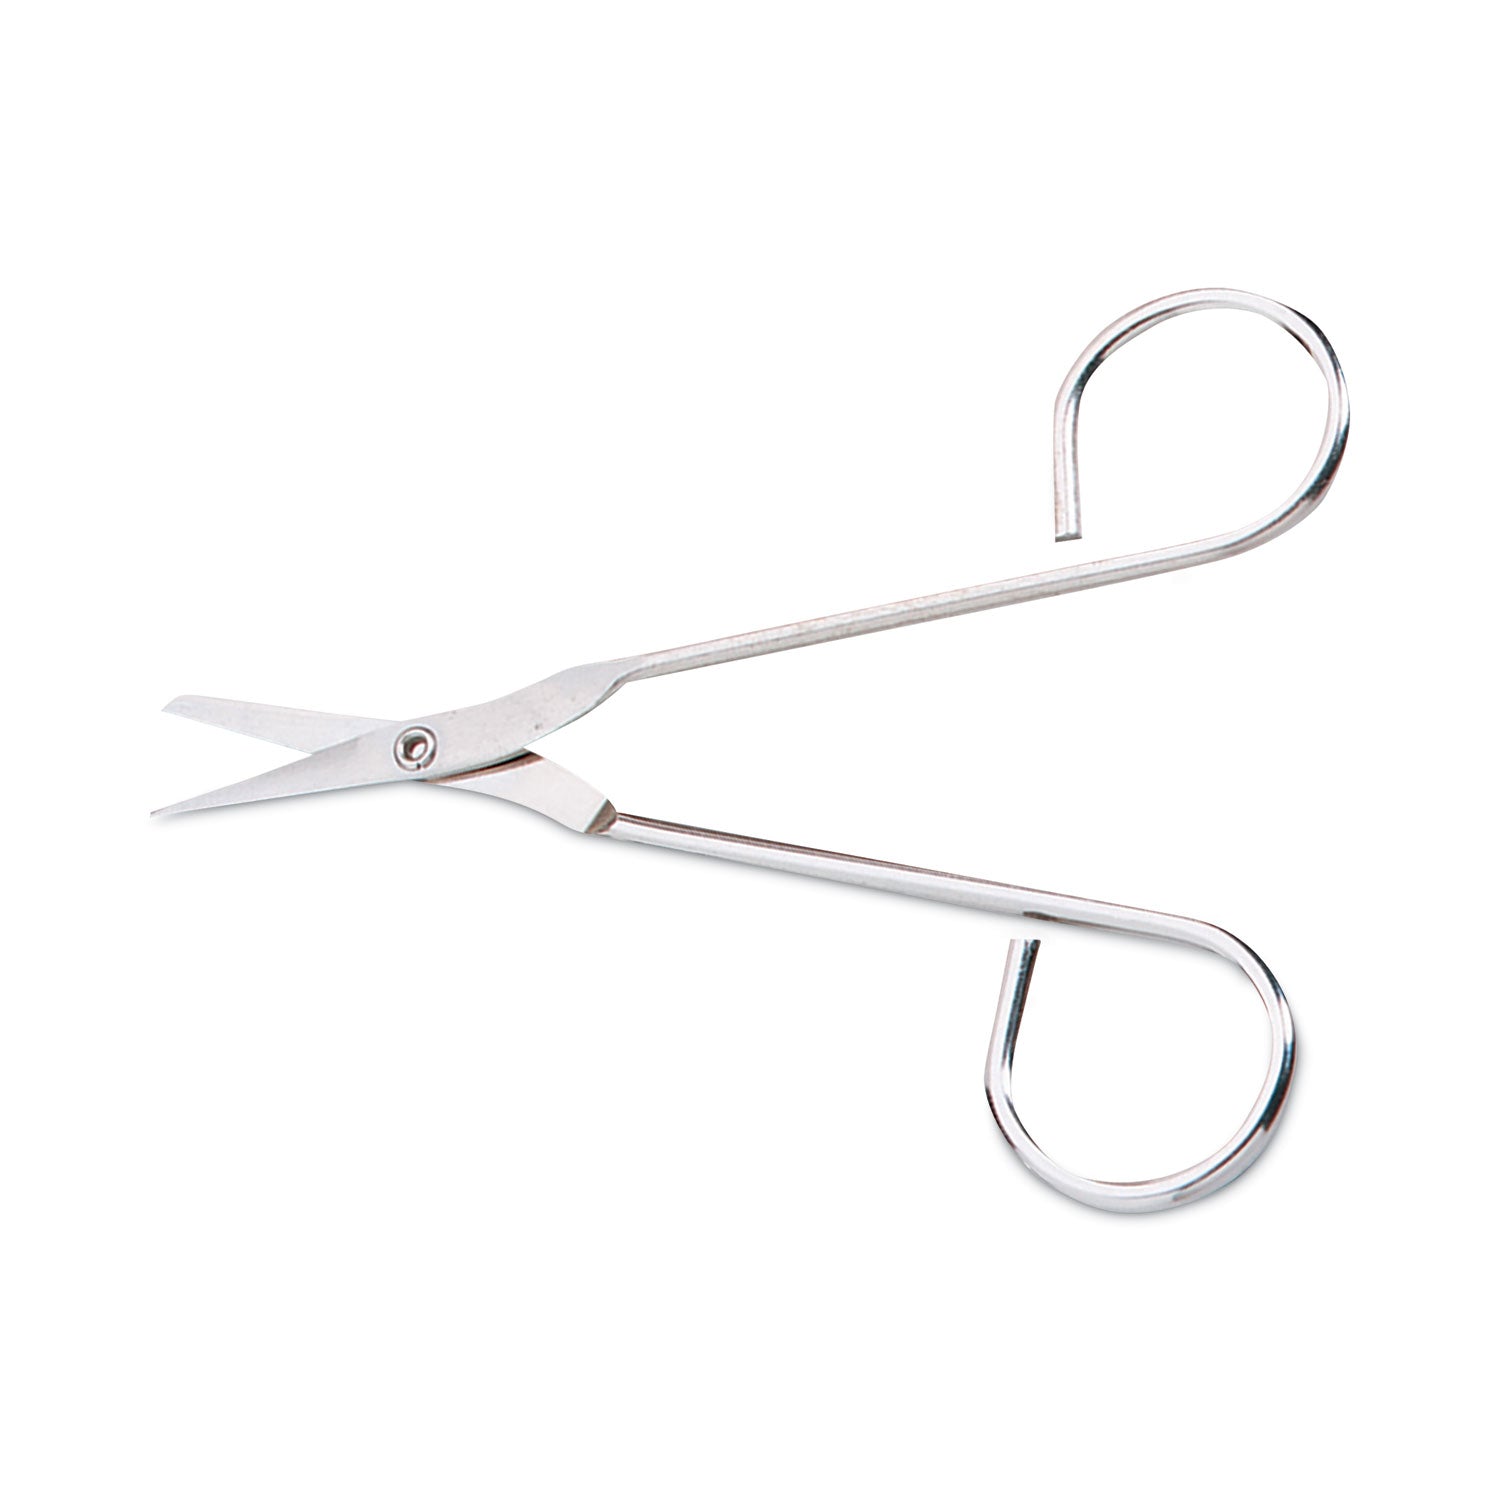 scissors-pointed-tip-45-long-nickel-straight-handle_faofae6004 - 1